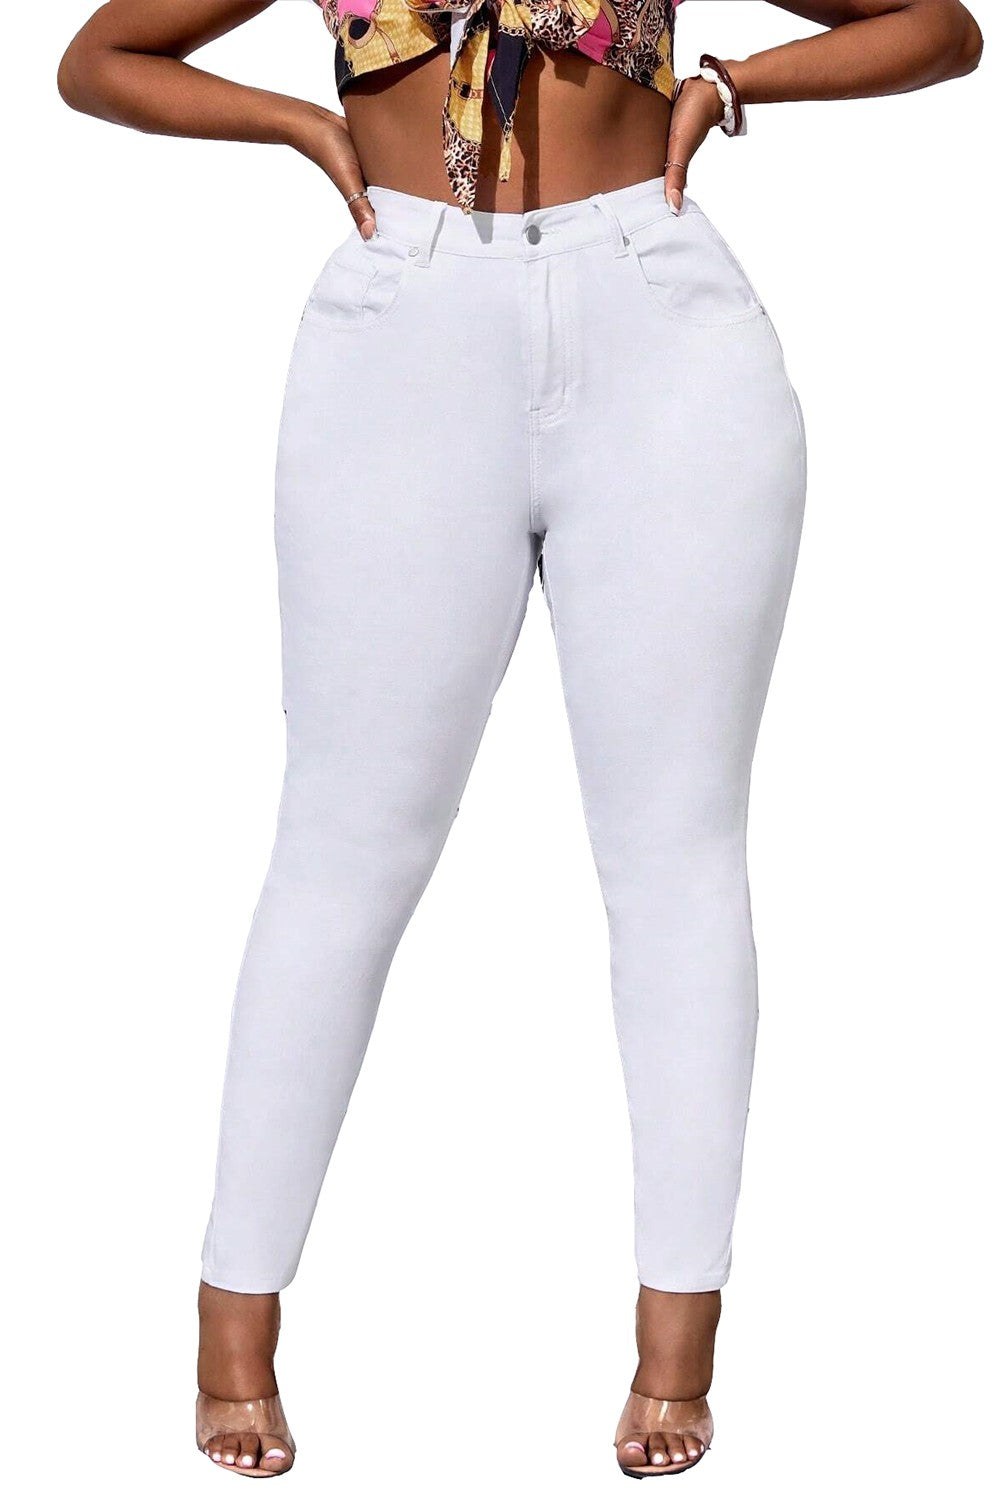 Women's White Stretch Skinny Jegging Pants